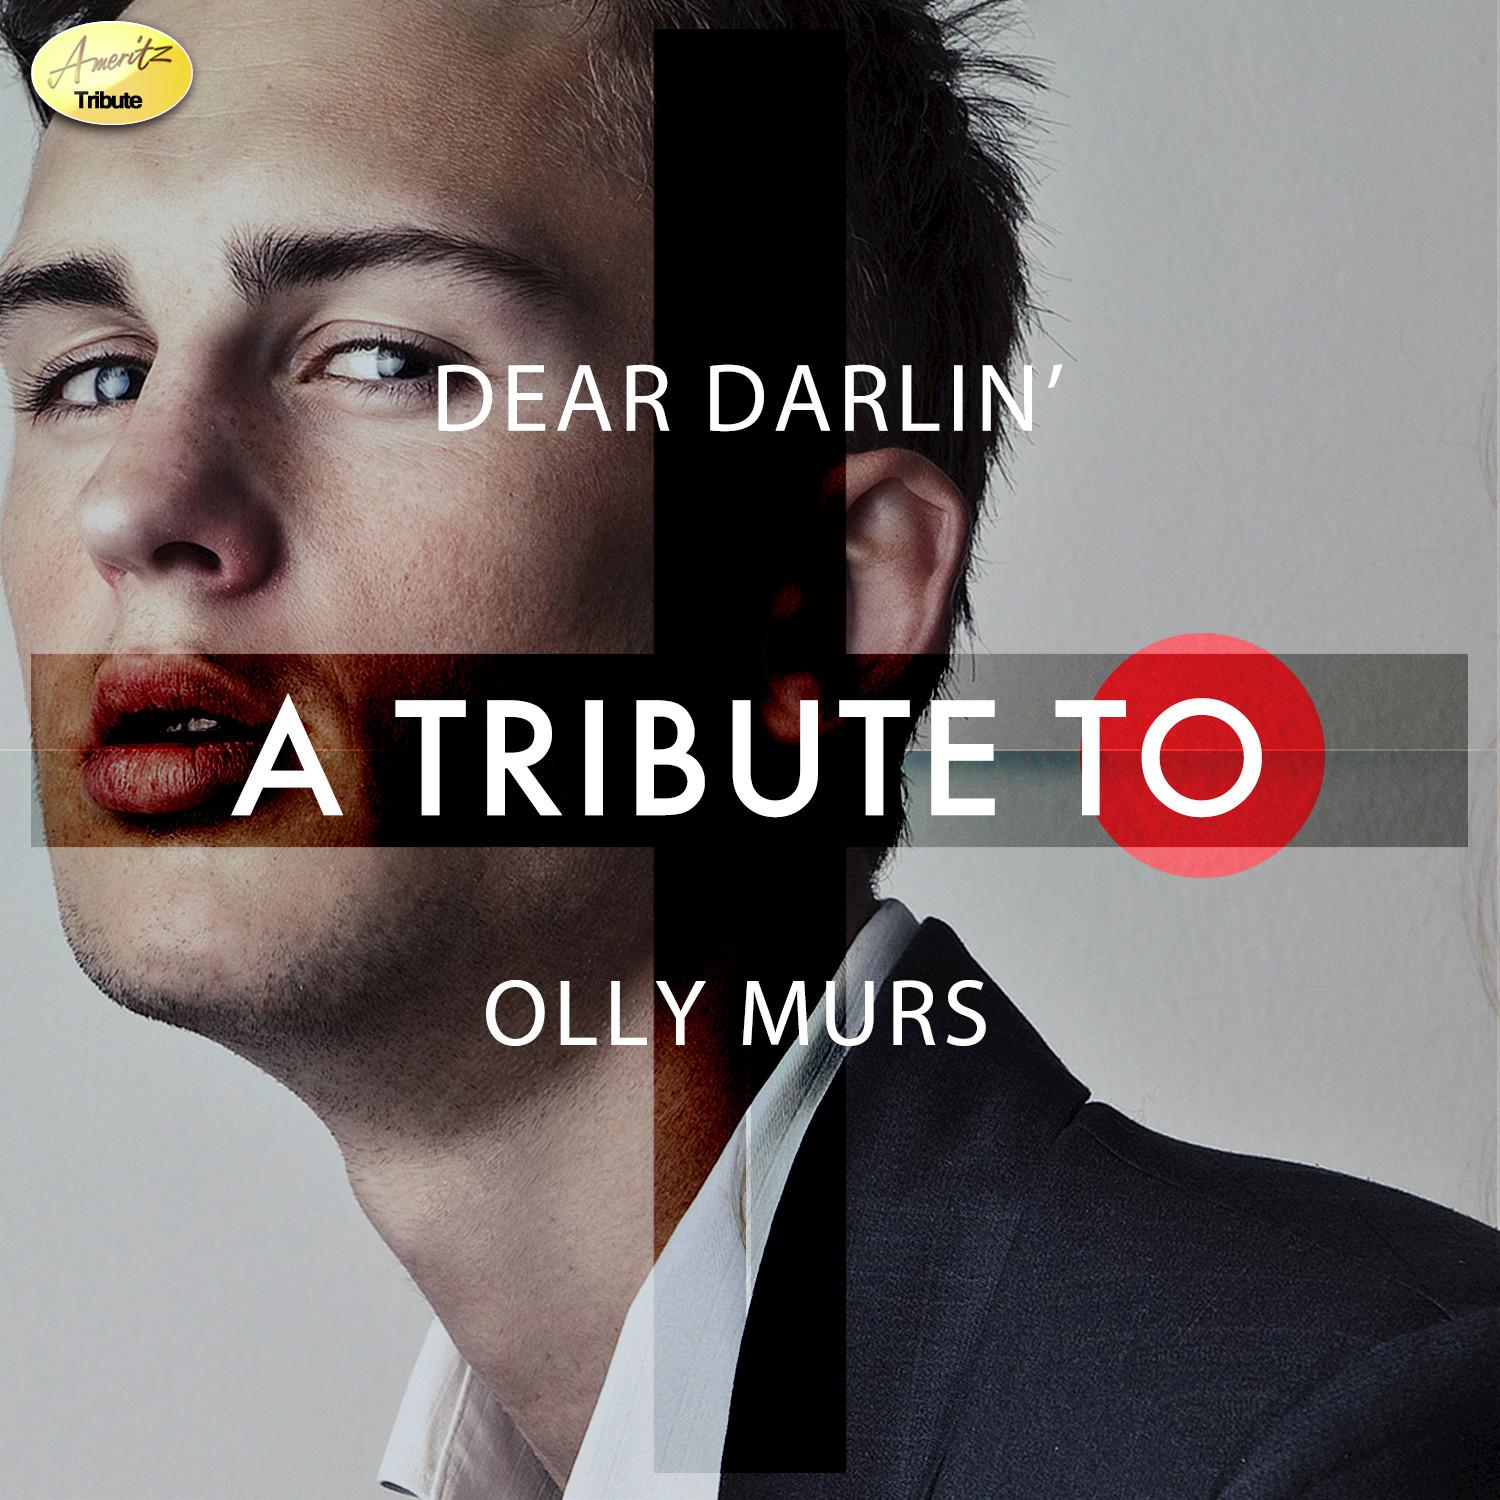 Dear Darlin' - A Tribute to Olly Murs